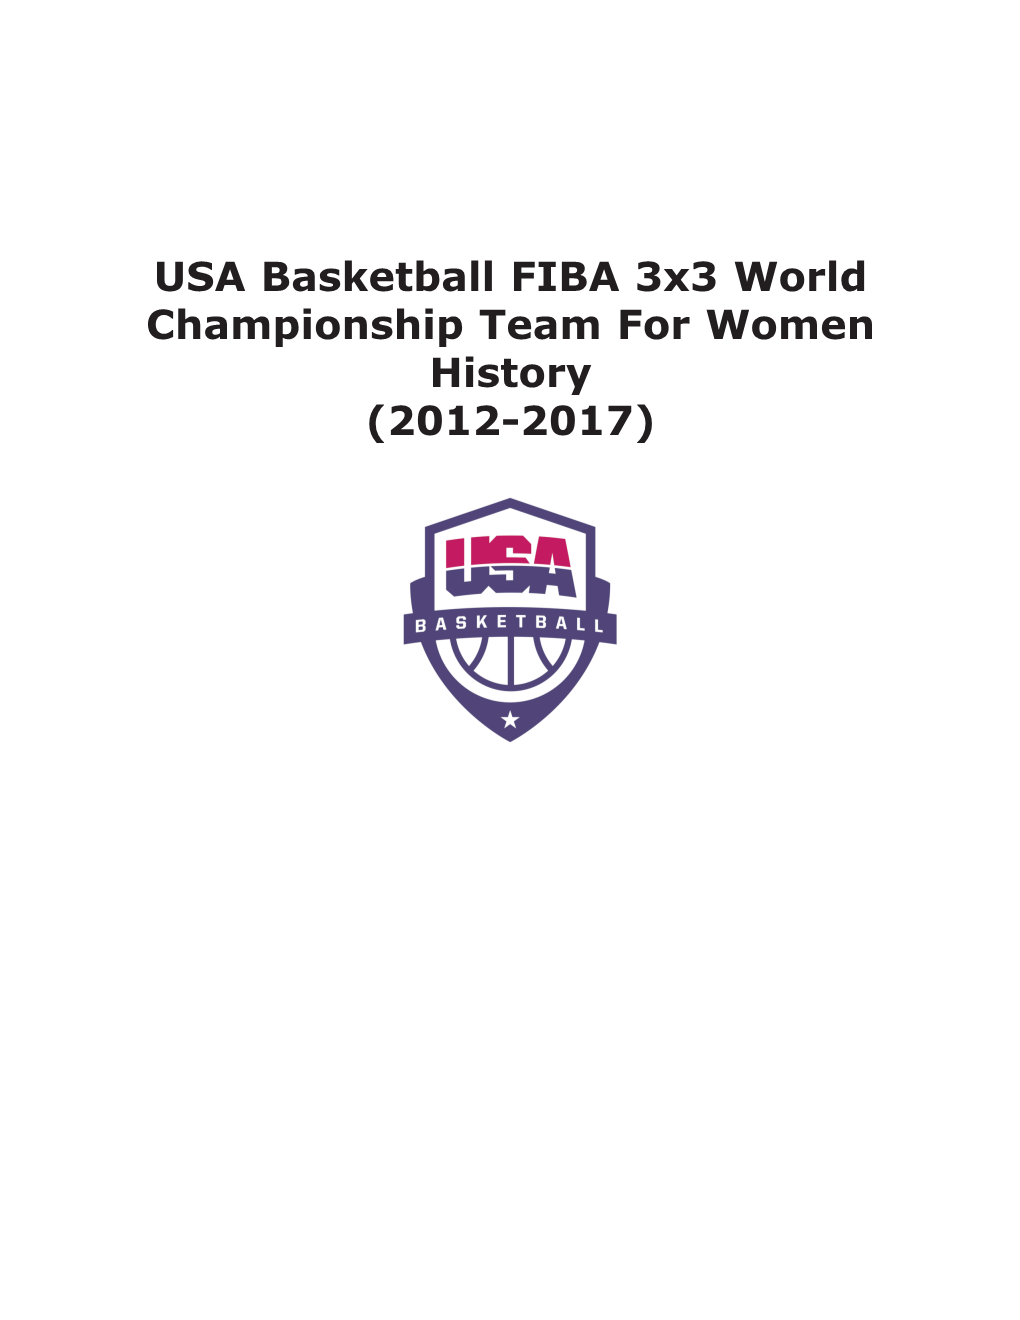 USA Basketball FIBA 3X3 World Championship Team for Women History (2012-2017) THIRD FIBA 3X3 WORLD CHAMPIONSHIP for WOMEN -- 2016 Guangzhou, China October 11-15, 2016